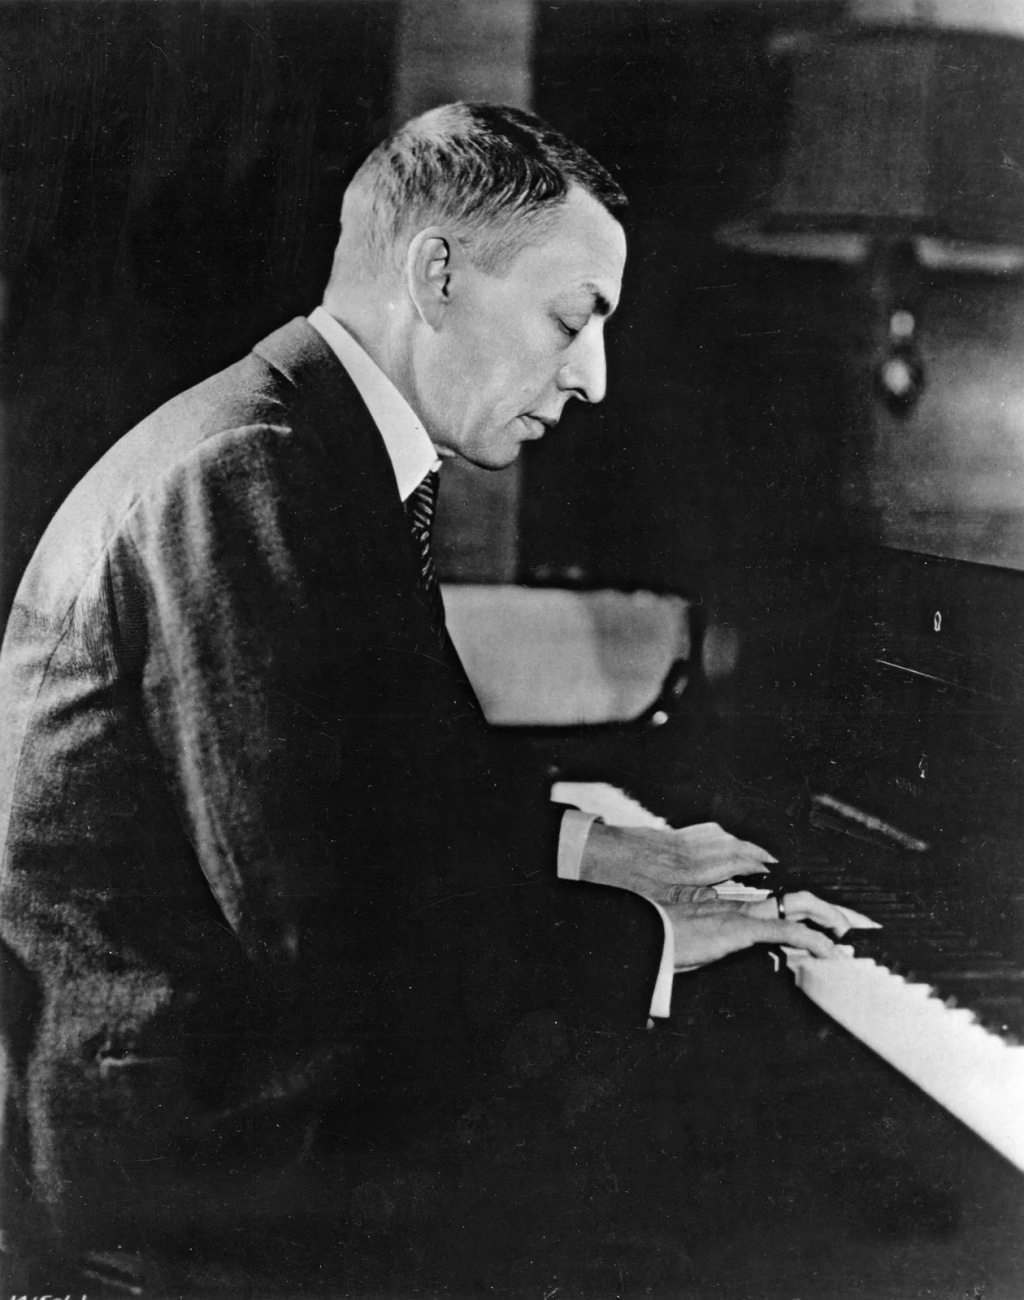 Sergei Rachmaninoff *IV 1 1873 / The Life You Give